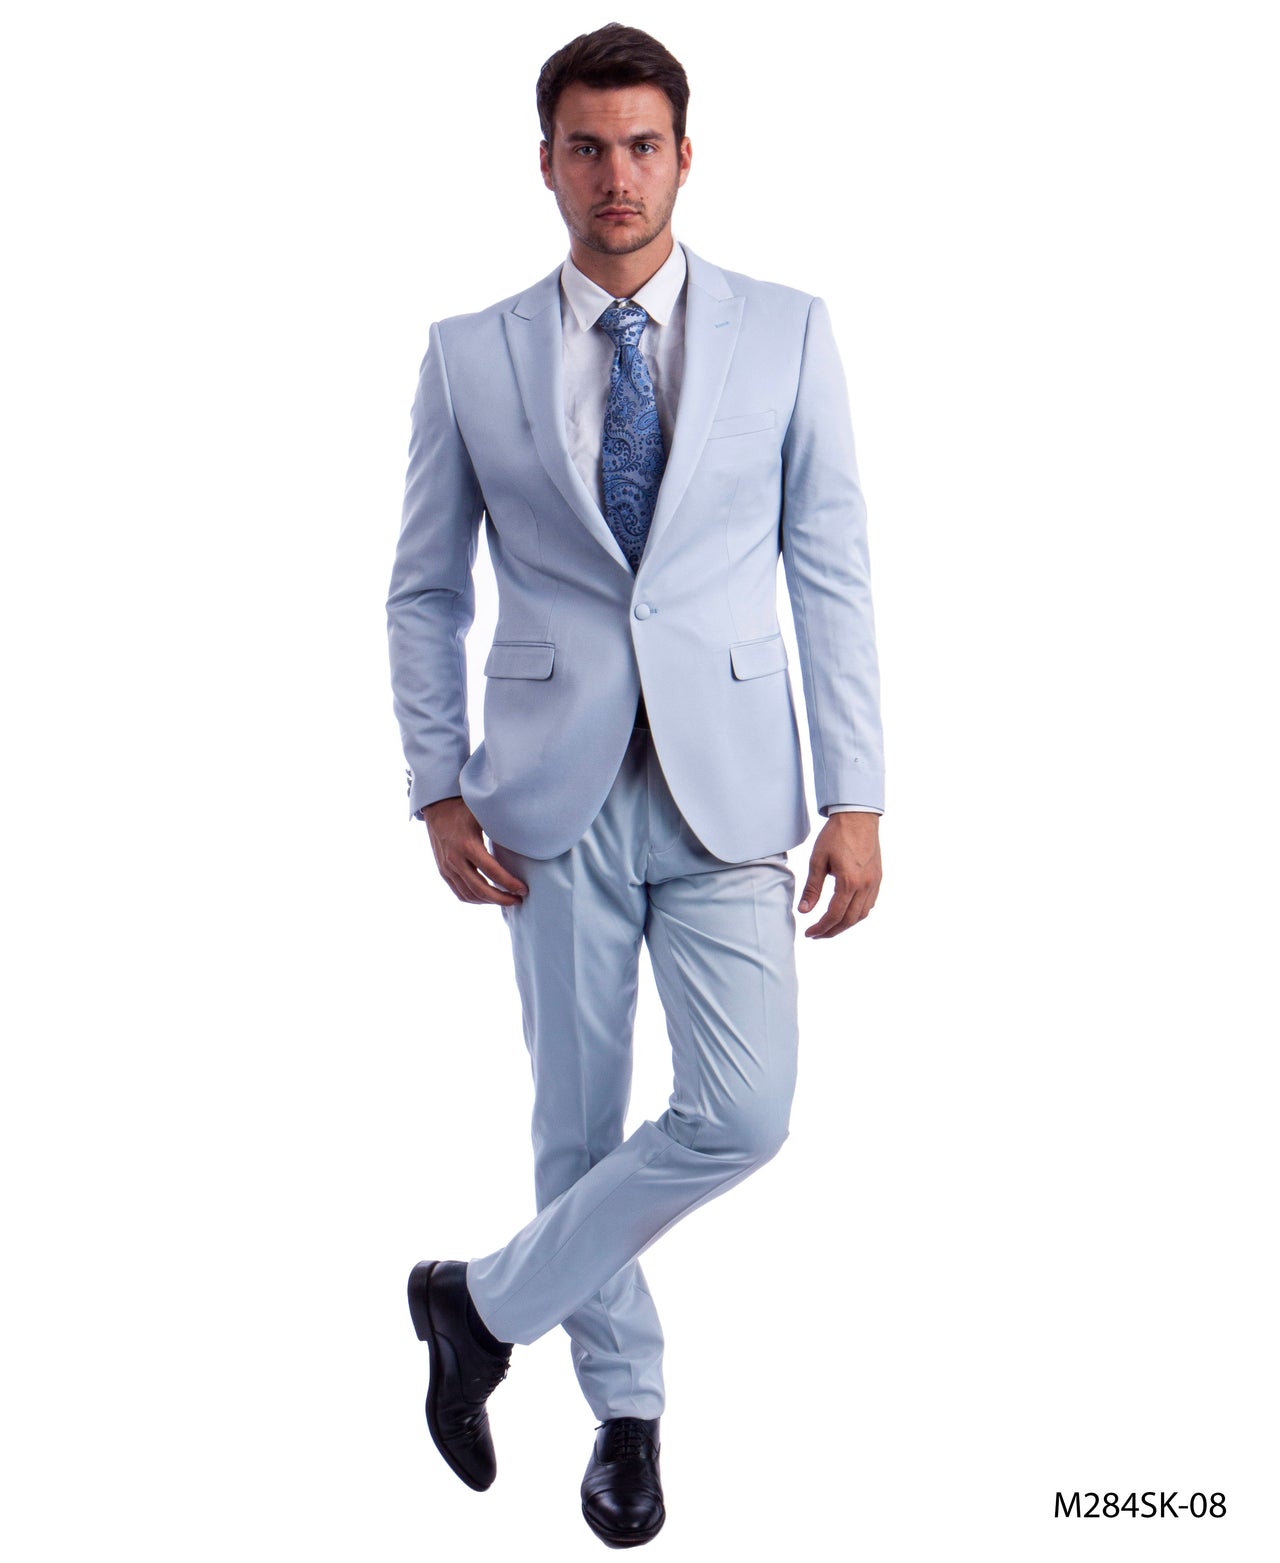 Lt.Blue Suit For Men Formal Suits For All Ocassions - Hattitude